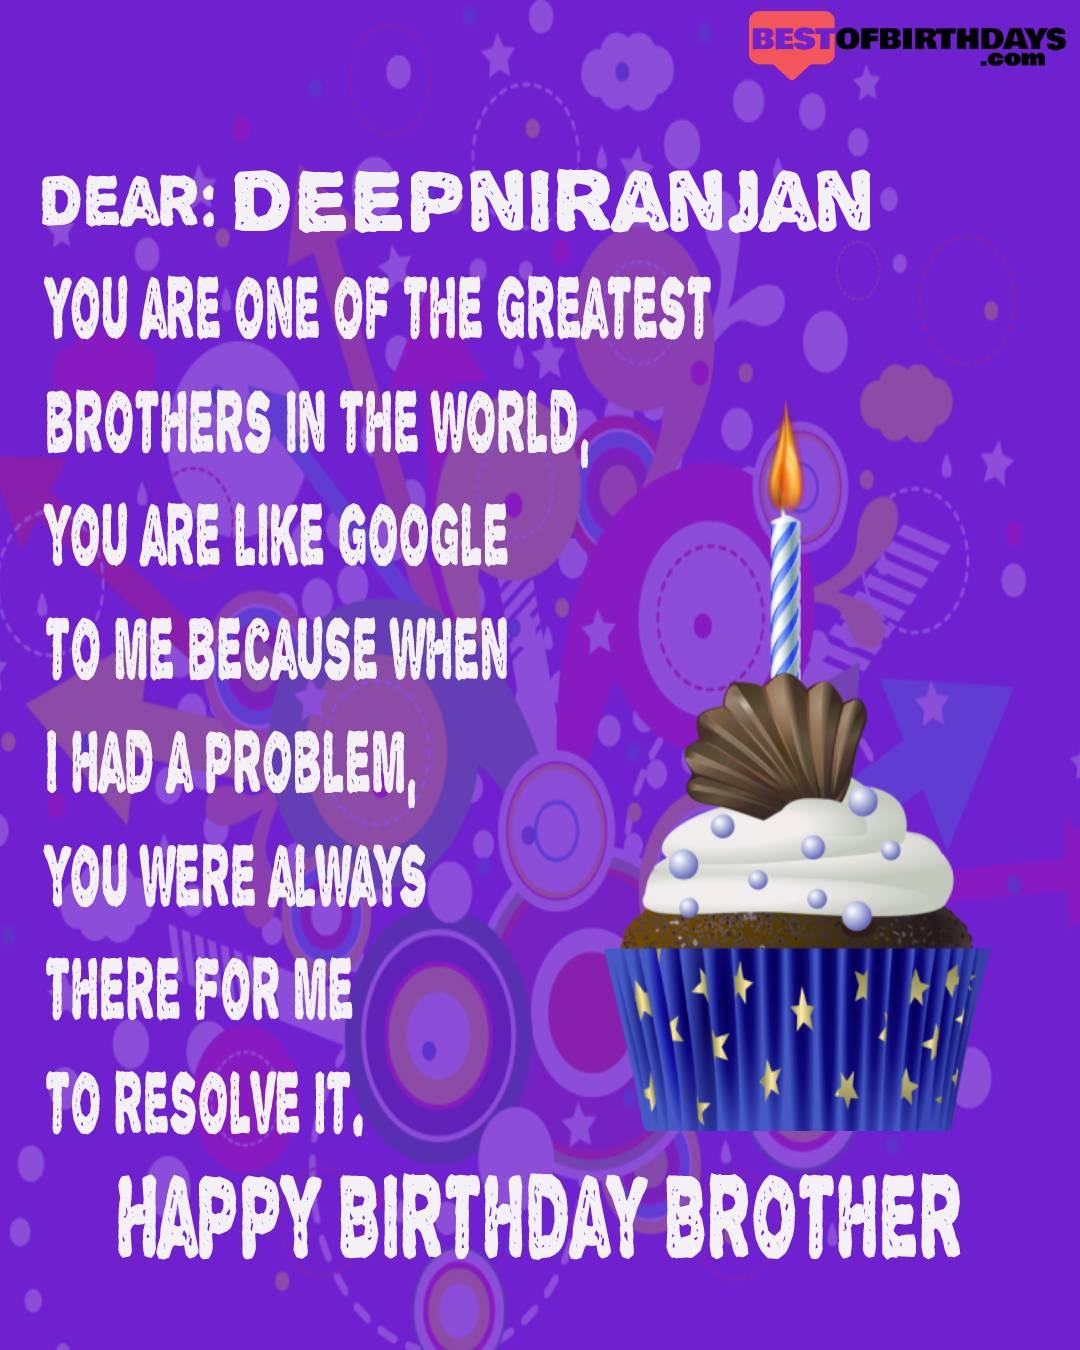 Happy birthday deepniranjan bhai brother bro